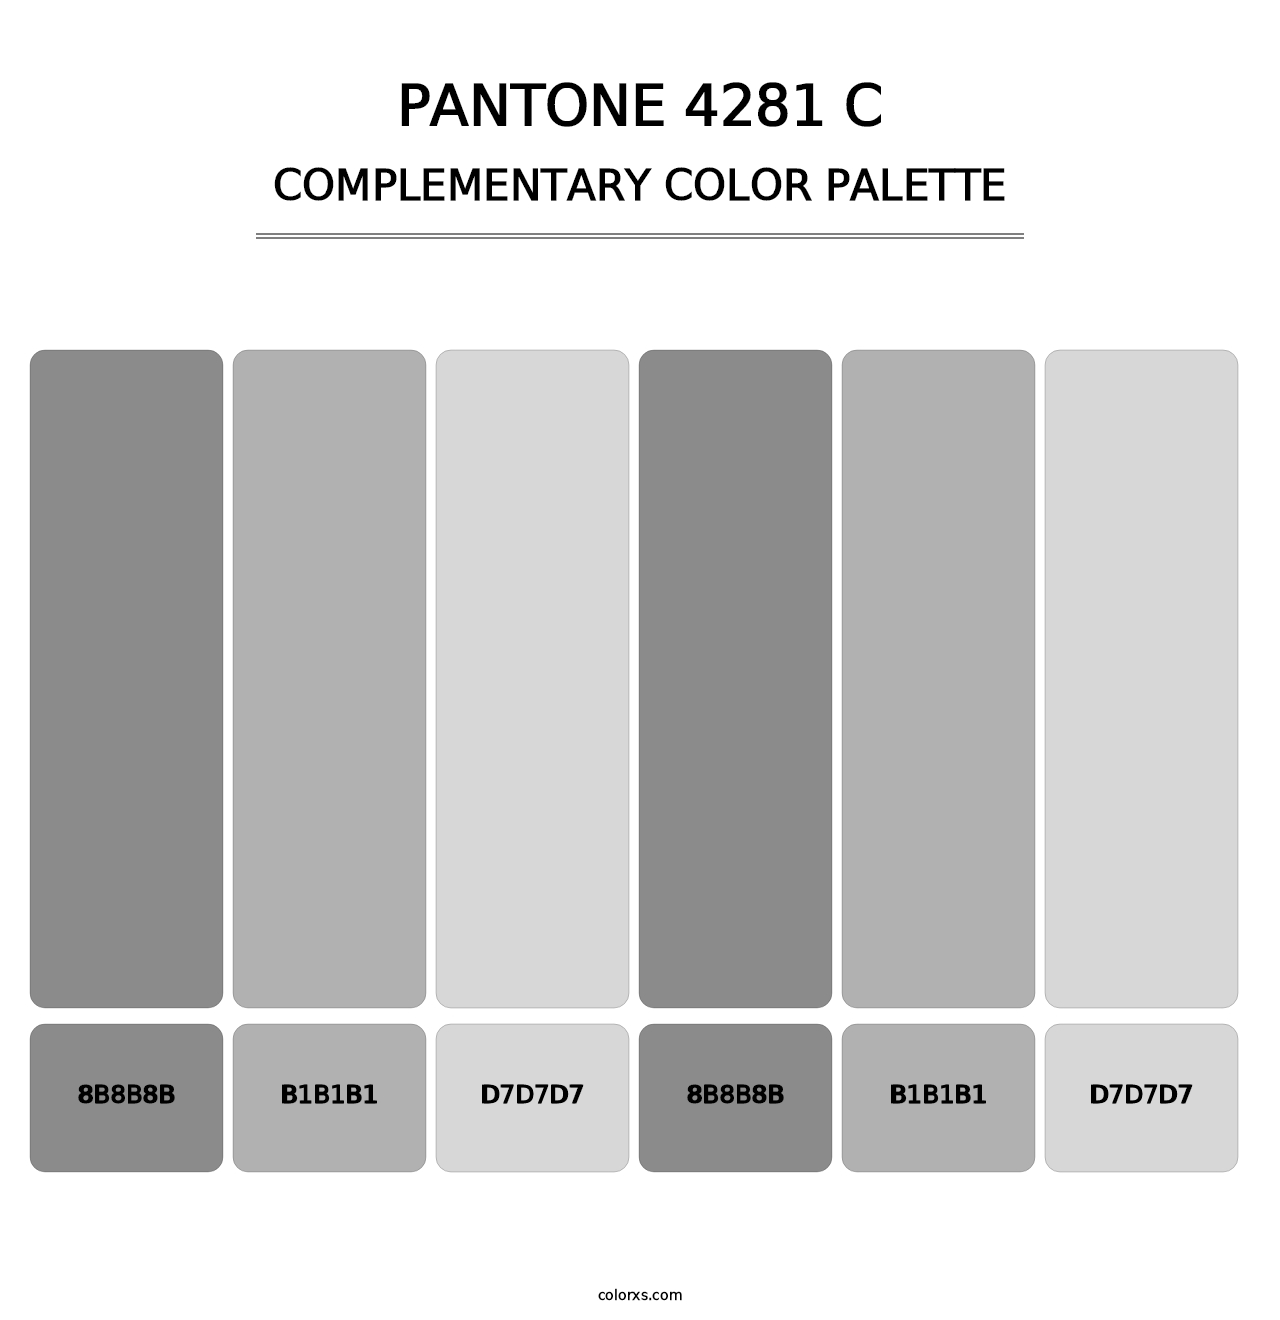 PANTONE 4281 C - Complementary Color Palette